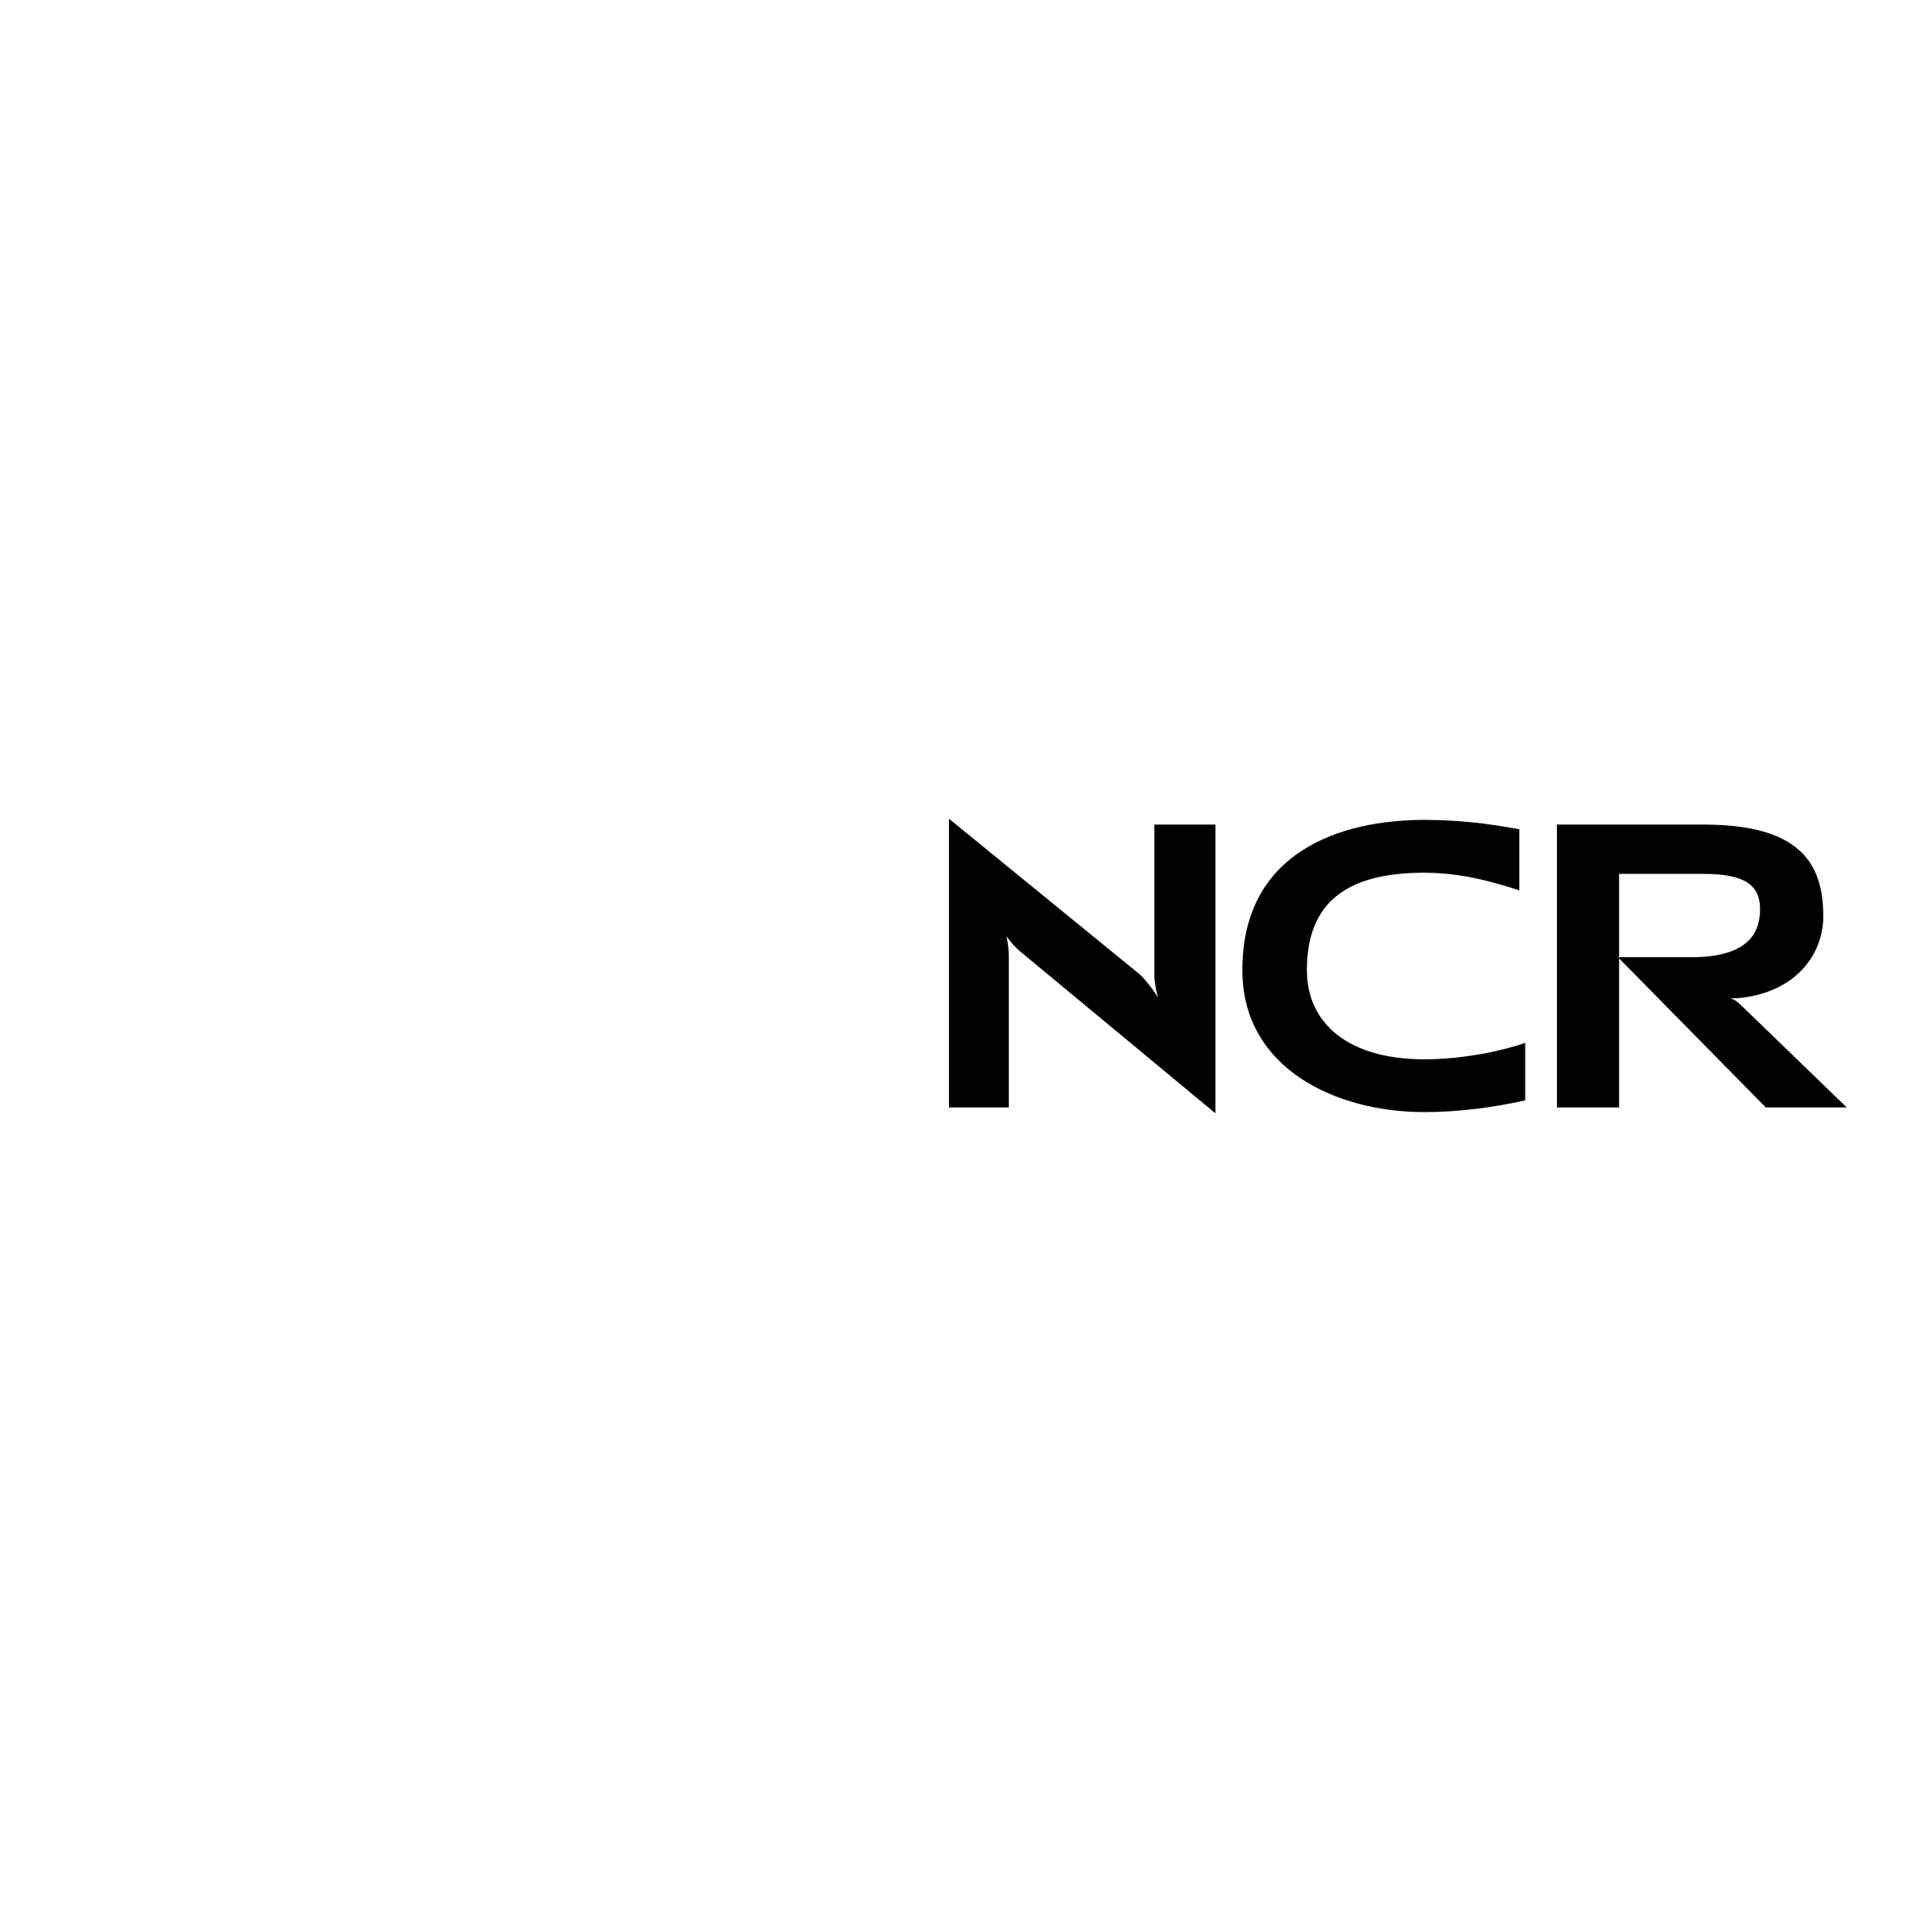 NCR Logo - NCR Logo PNG Transparent & SVG Vector - Freebie Supply